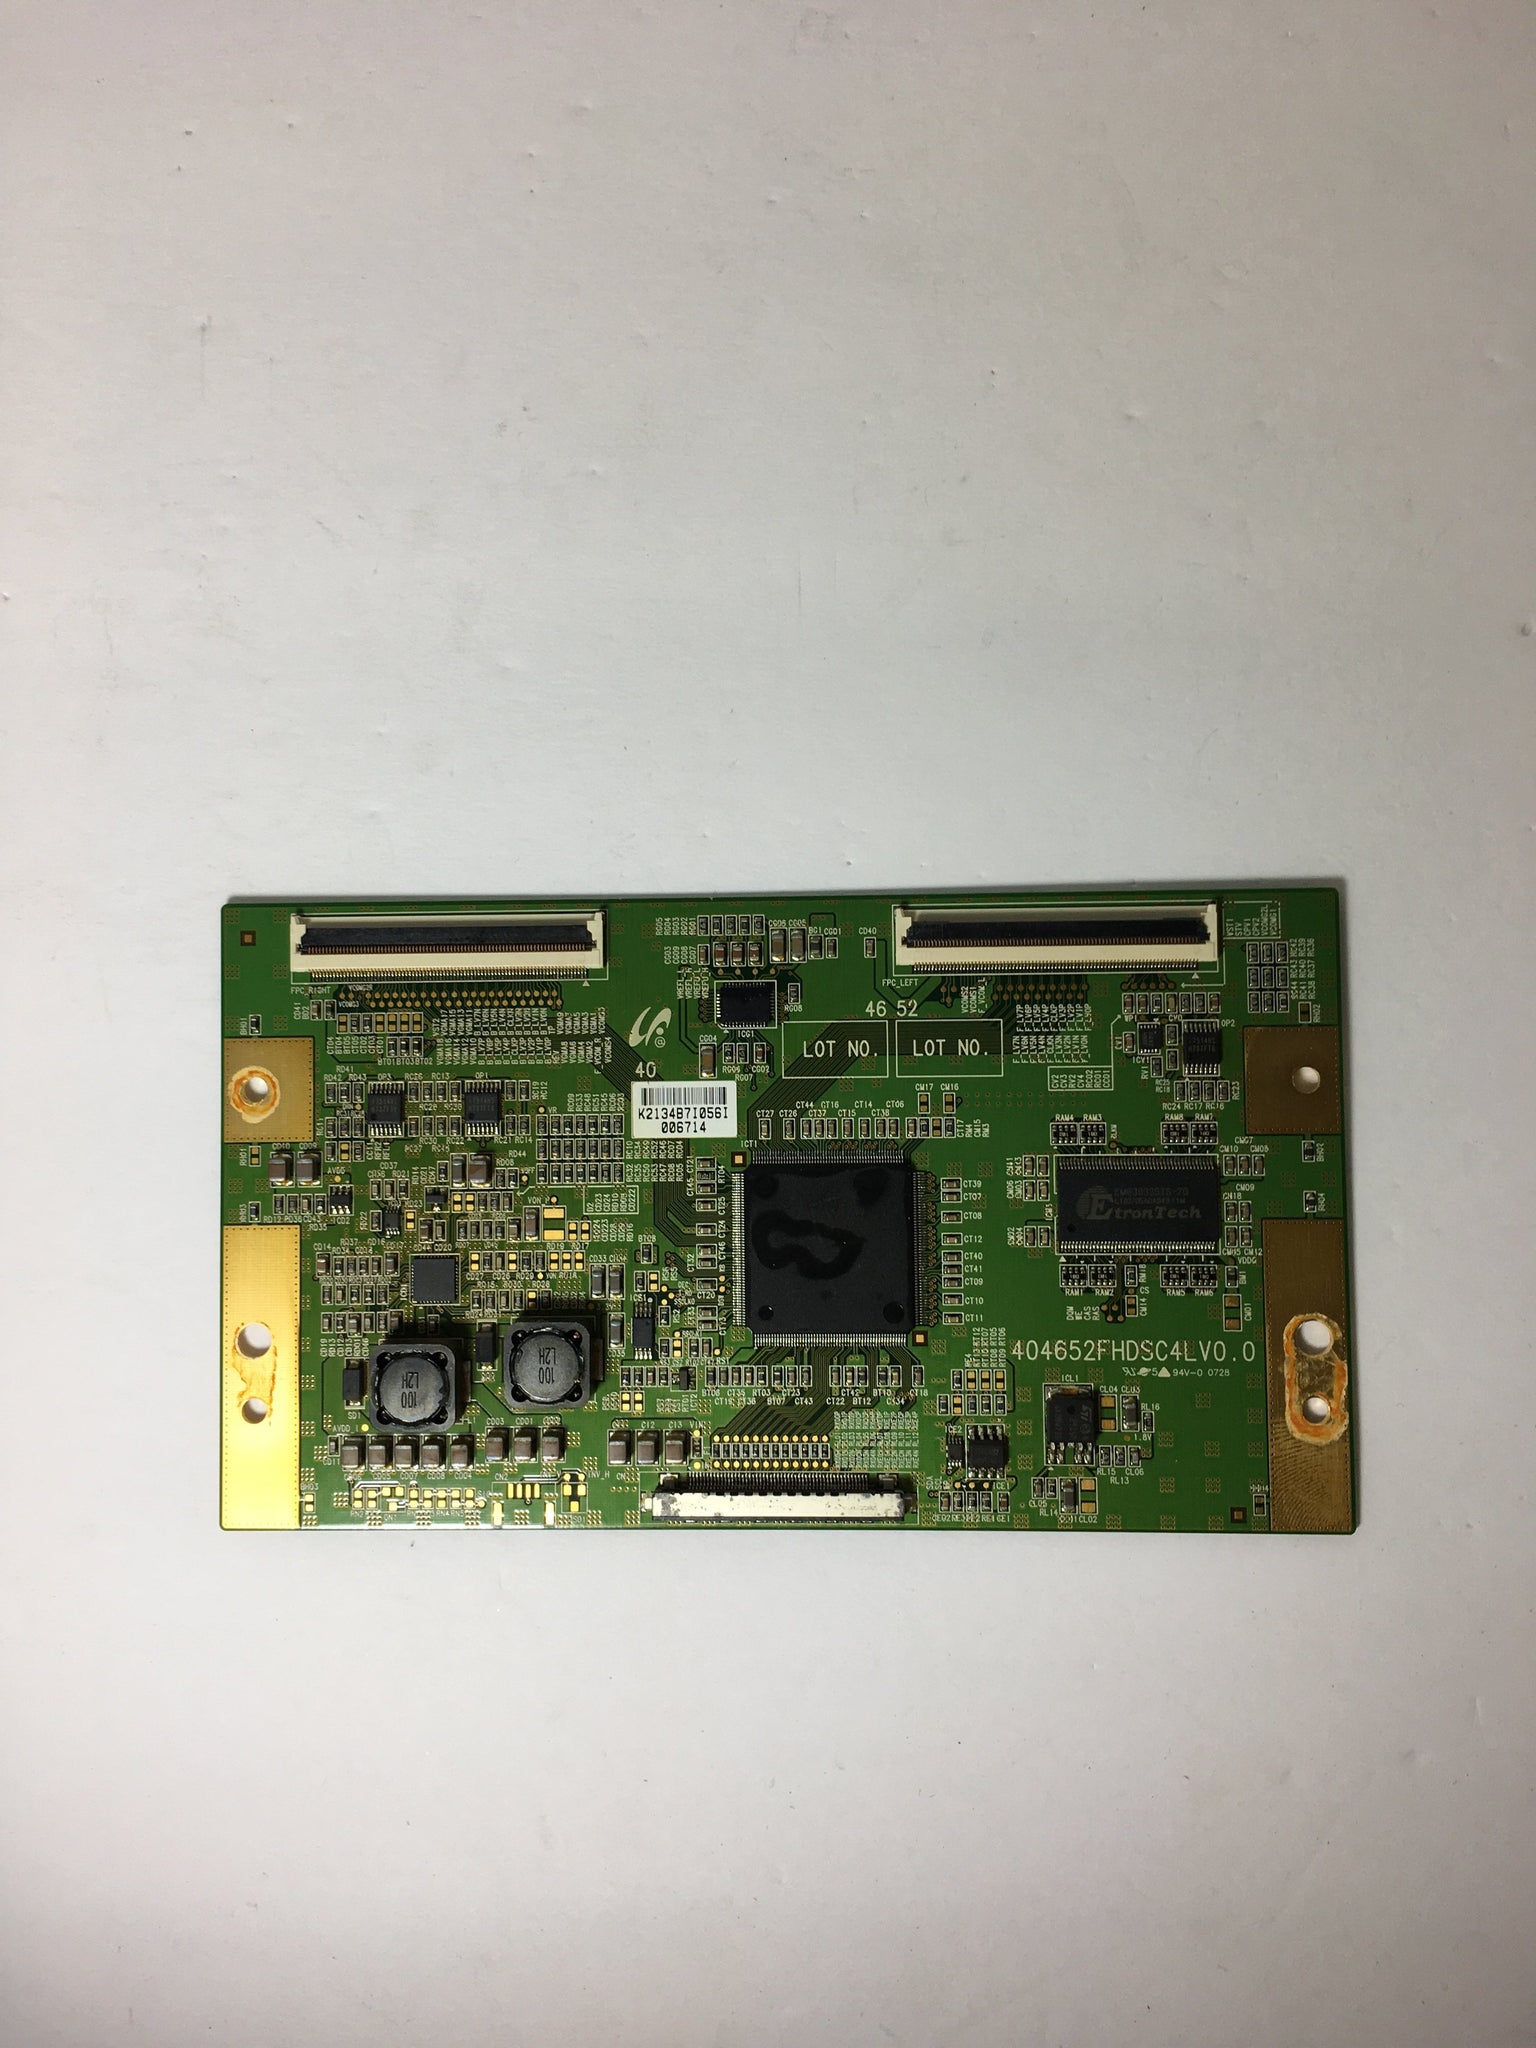 Samsung LJ94-02134B (404652FHDSC4LV0.0) T-Con Board